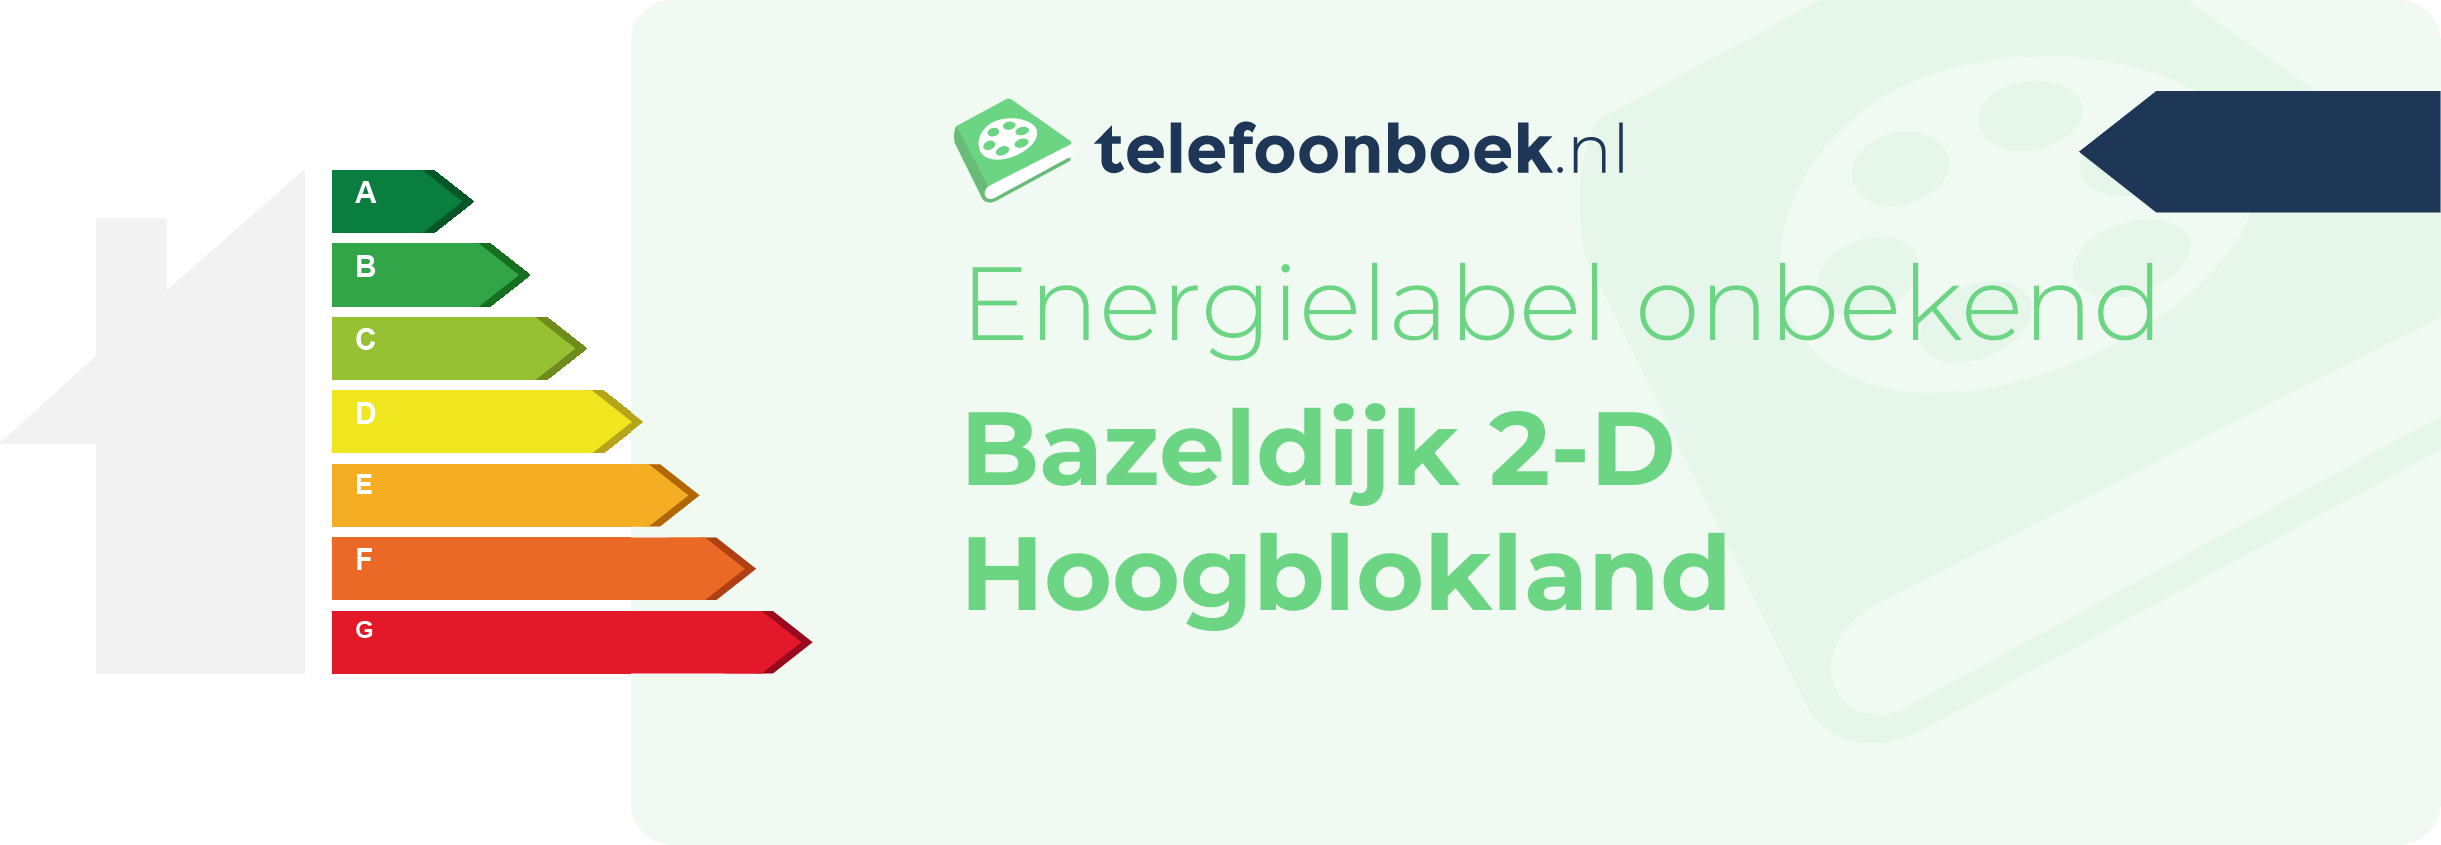 Energielabel Bazeldijk 2-D Hoogblokland